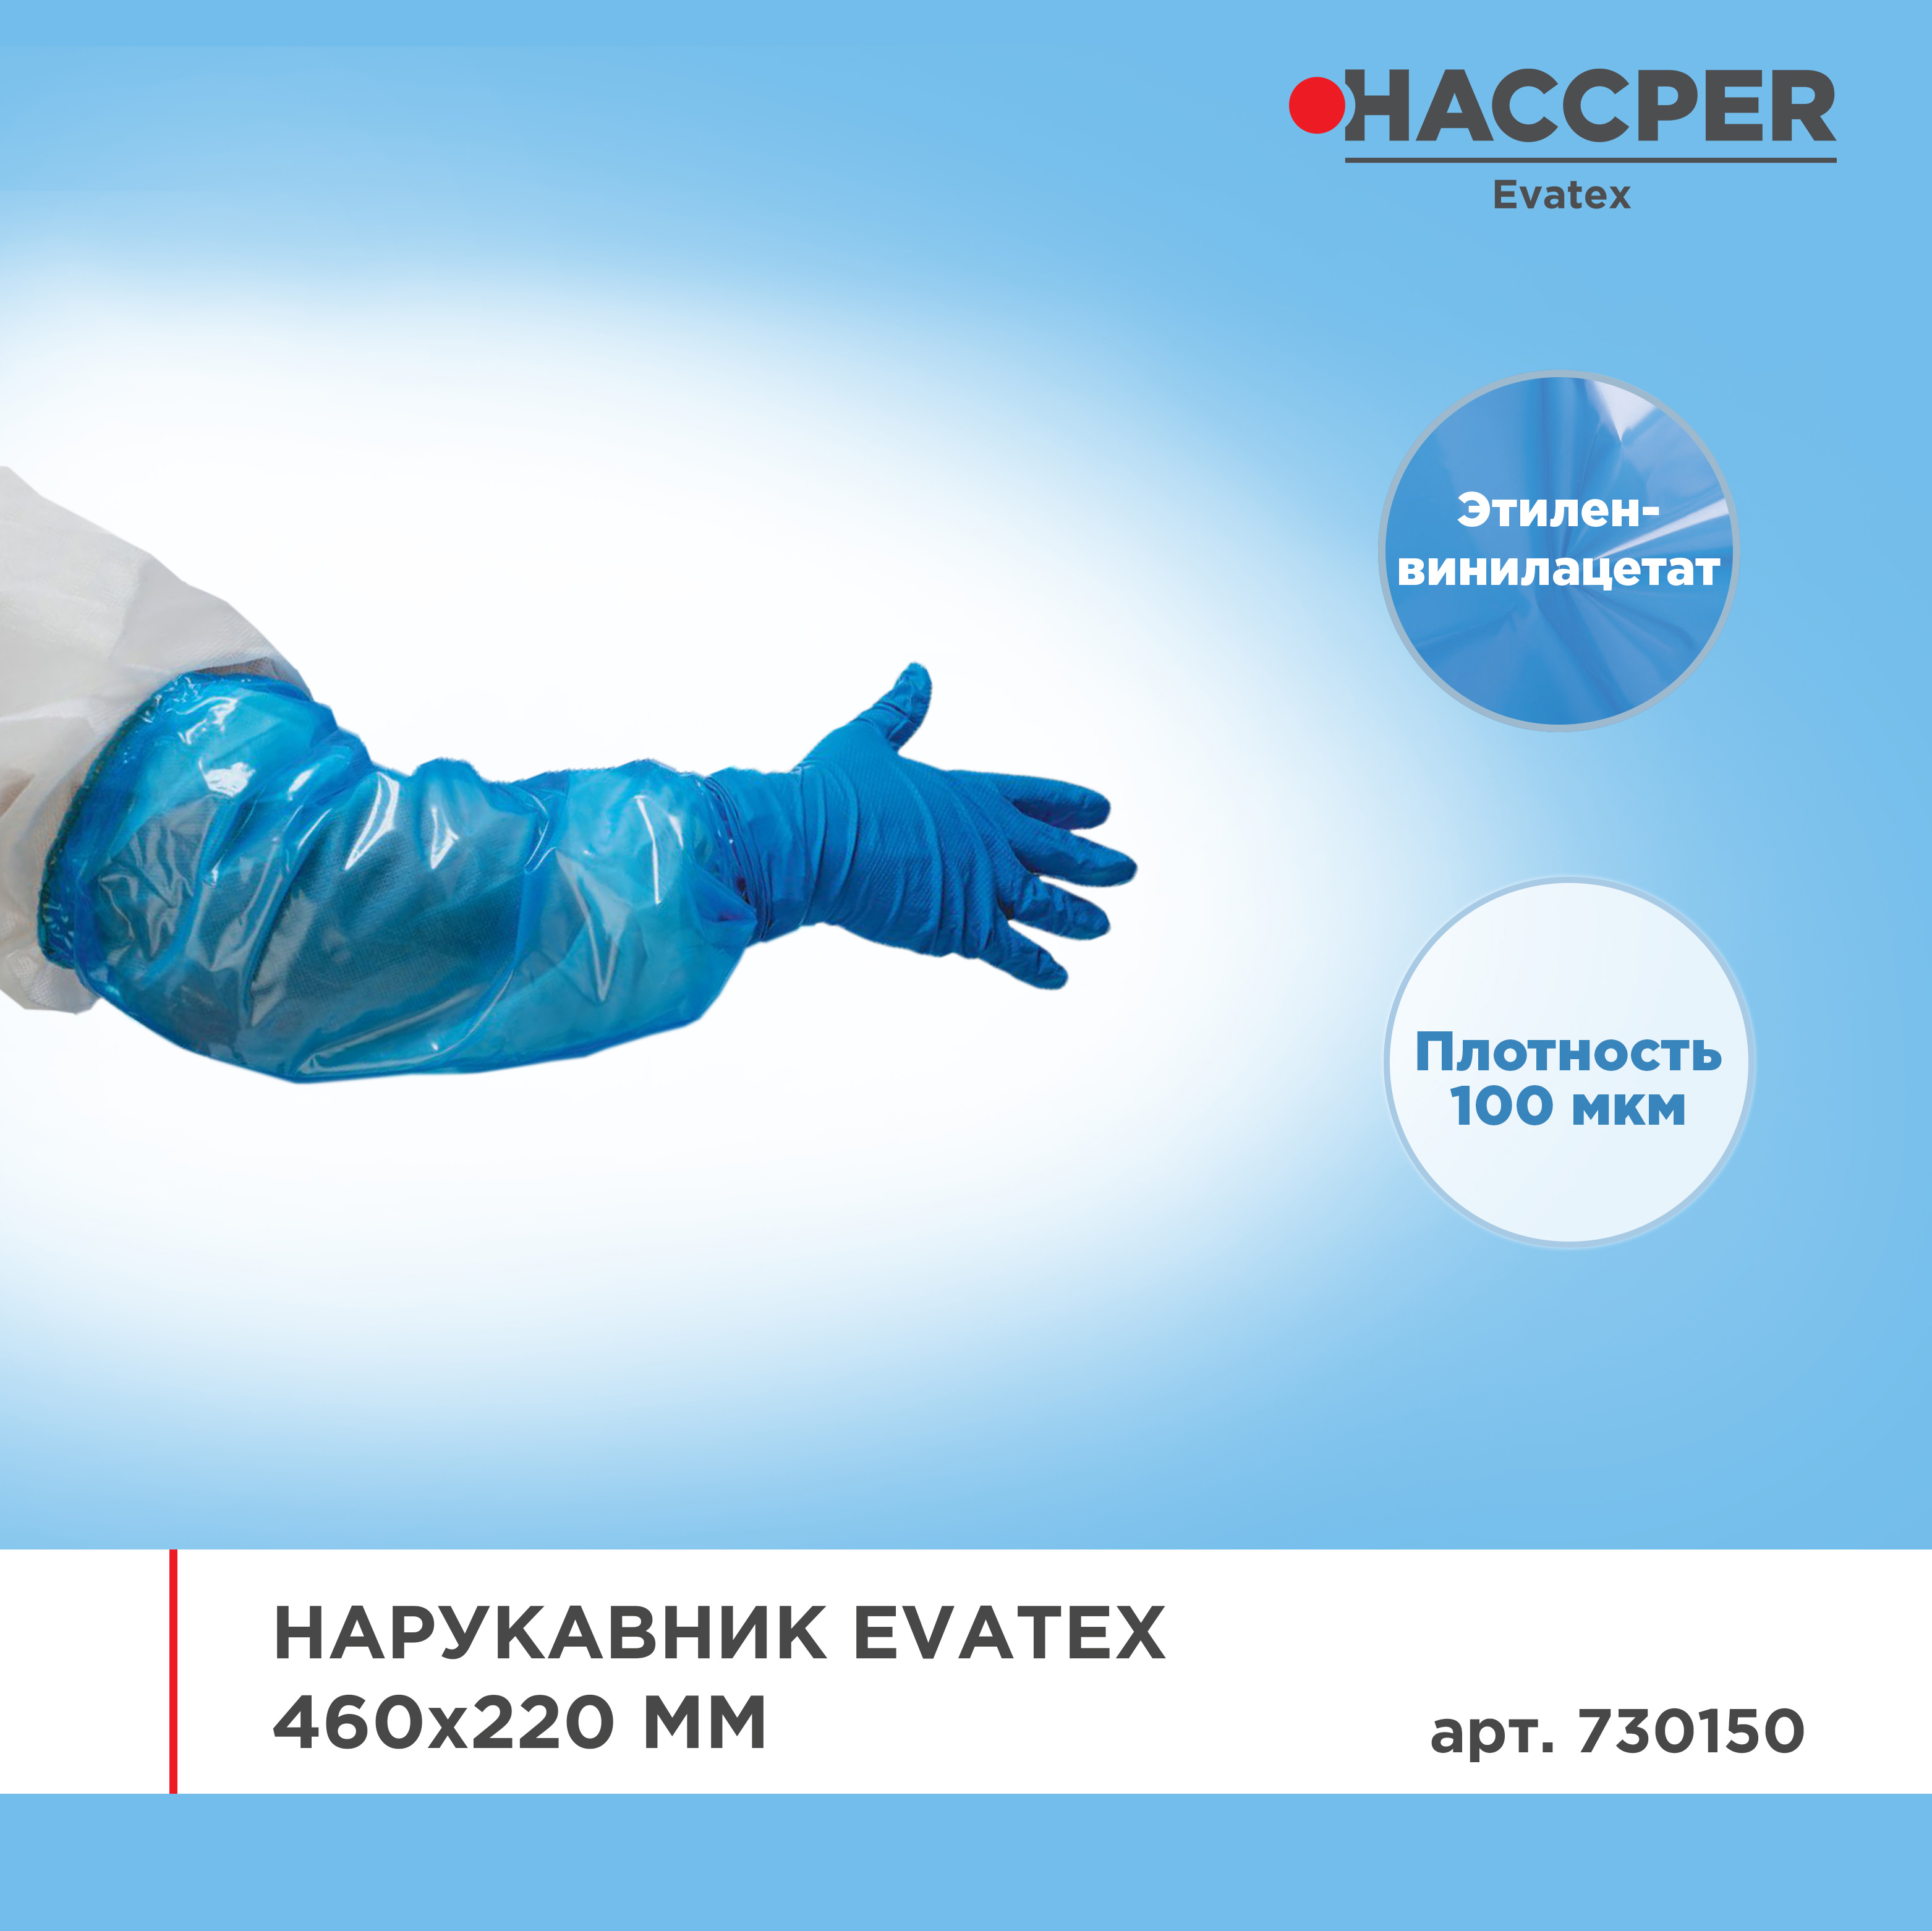 Нарукавник HACCPER Evatex 460х220 мм, 100 мкм, синий, 1 пара/упак